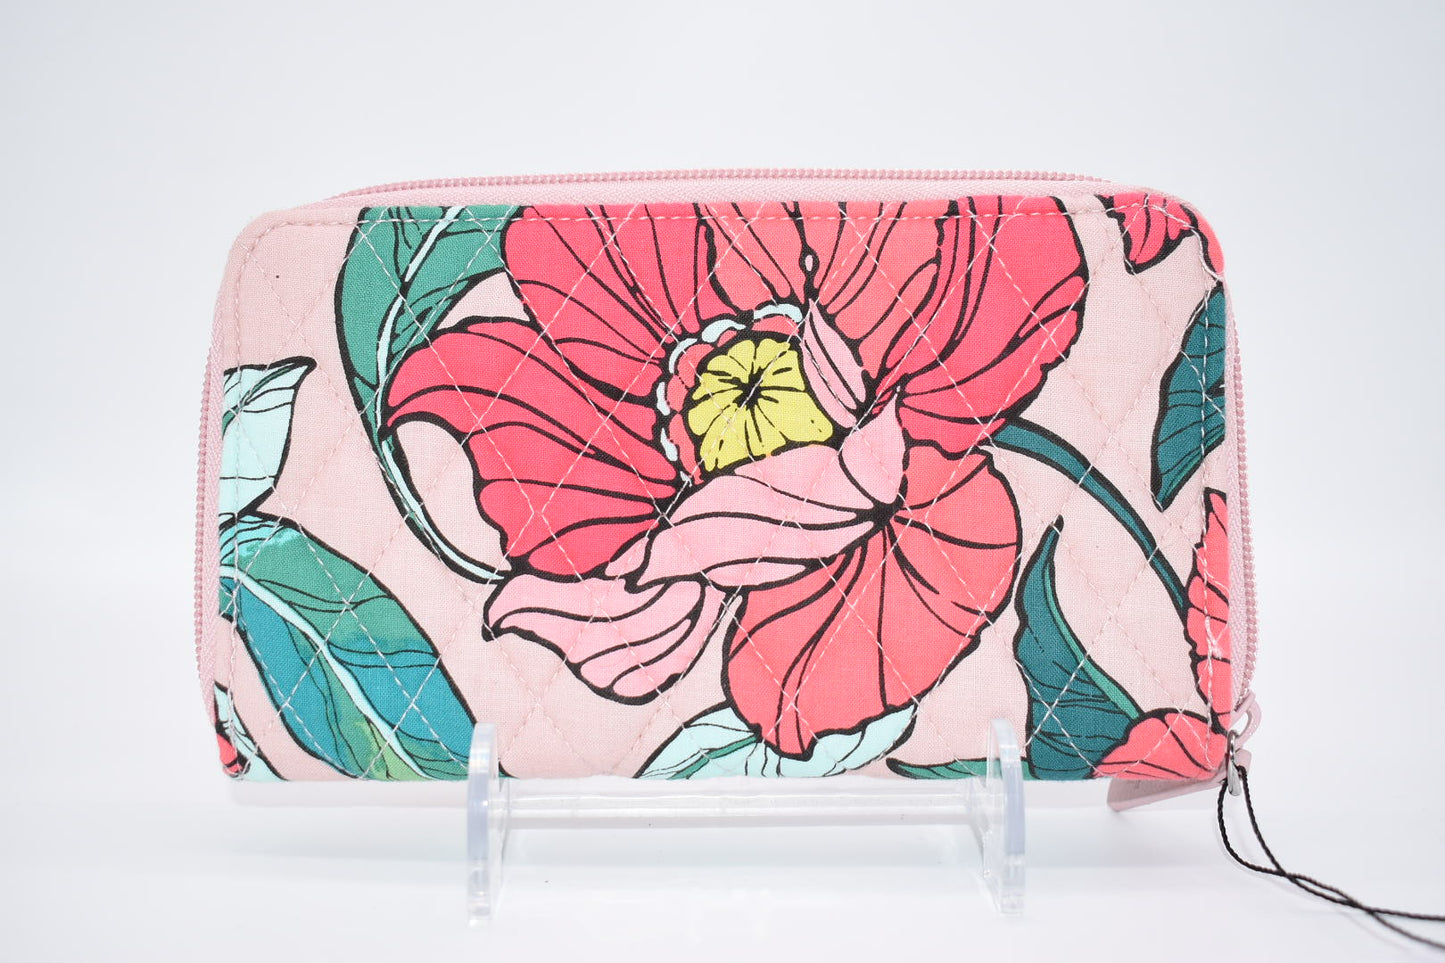 Vera Bradley Accordion Wallet in "Vintage Floral" Pattern